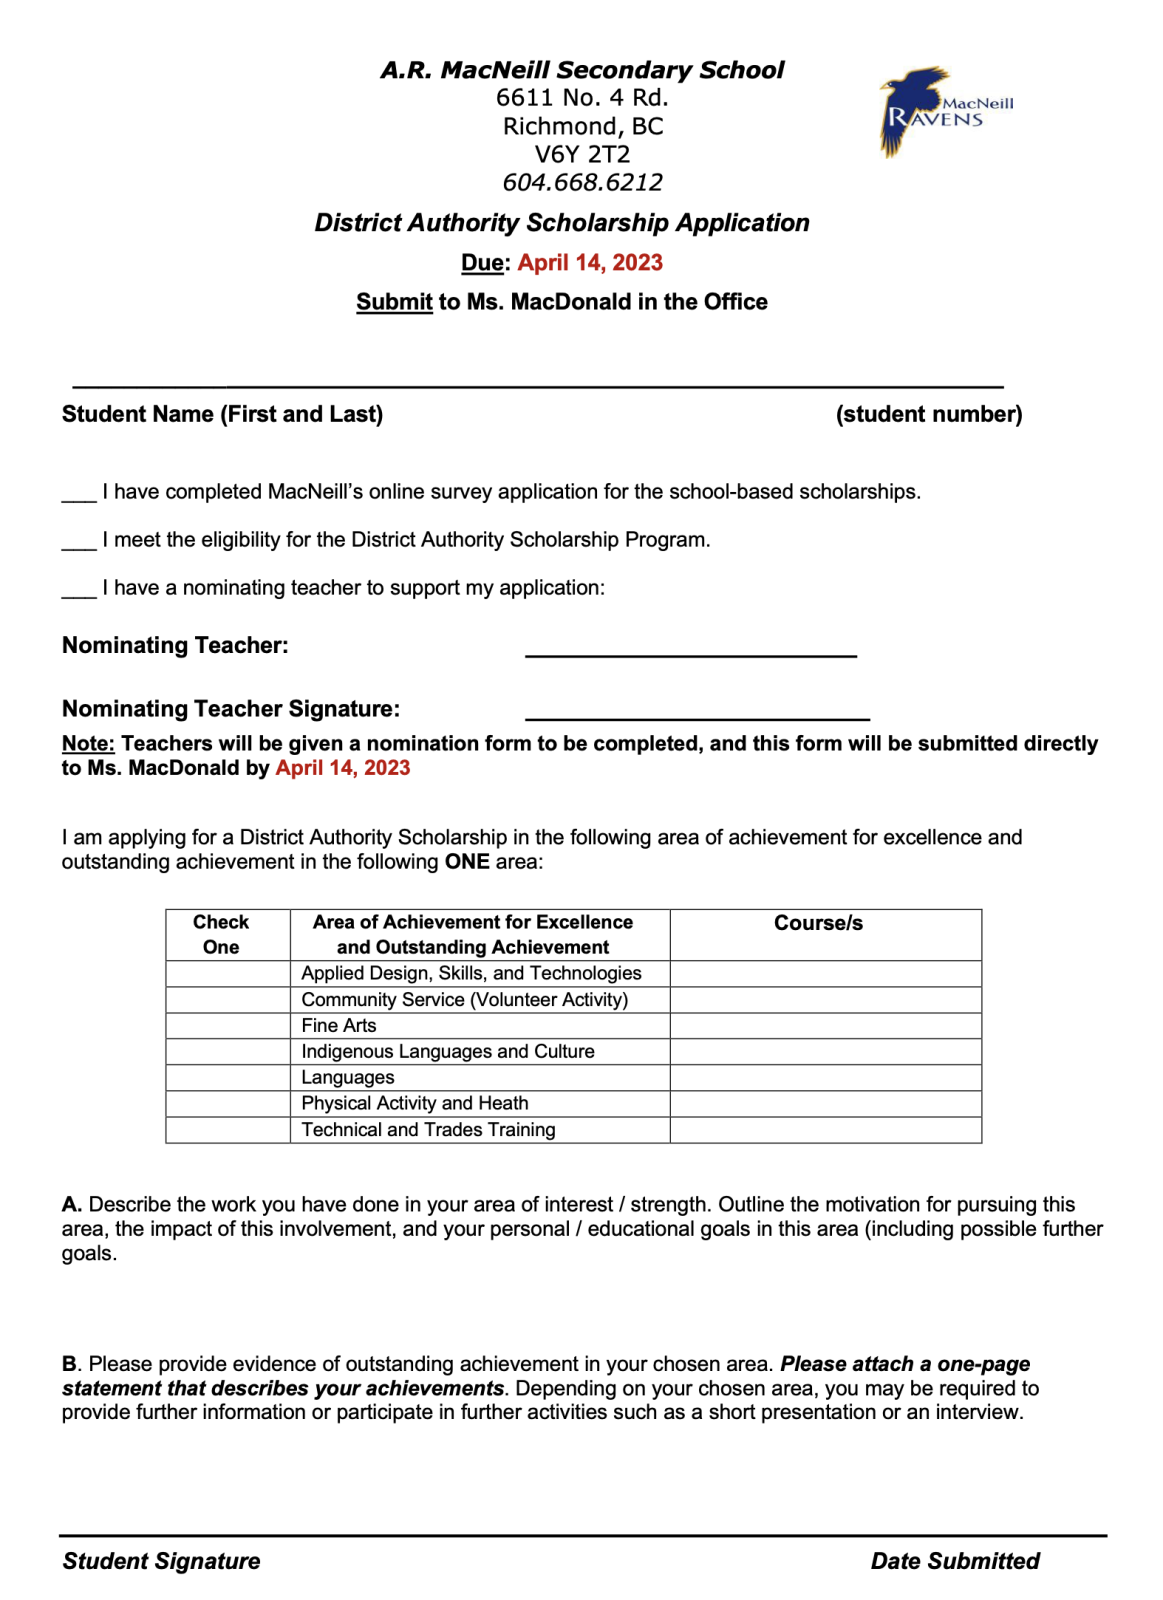 Grade 12 MacNeill Scholarship Application | A.R. MacNeill Secondary School